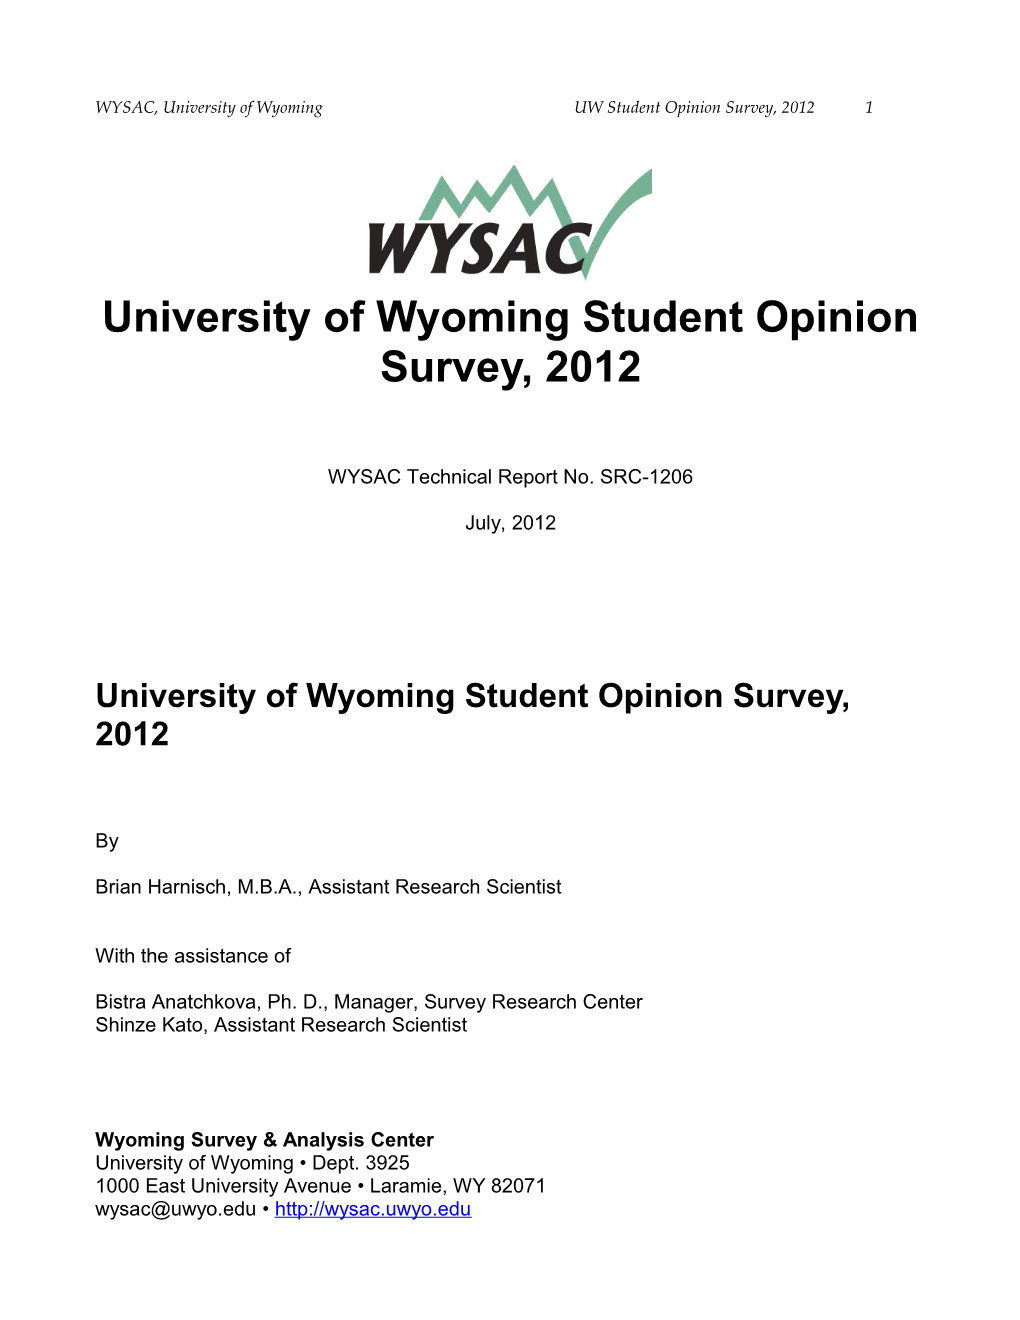 University of Wyoming Student Opinion Survey, 2012